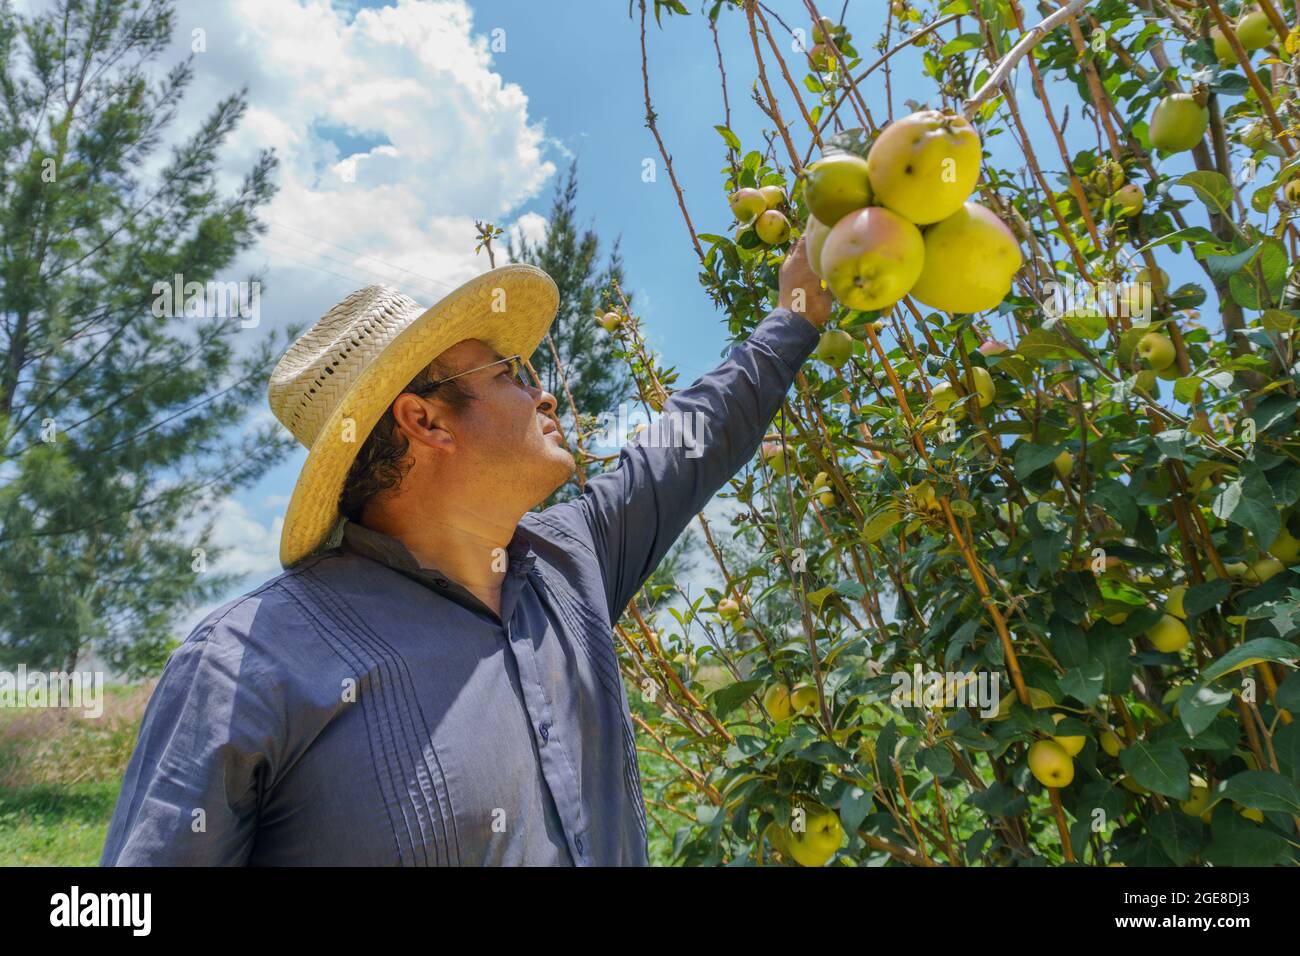 Middle-aged Hispanic farmer on a farm with apple trees Stock Photo